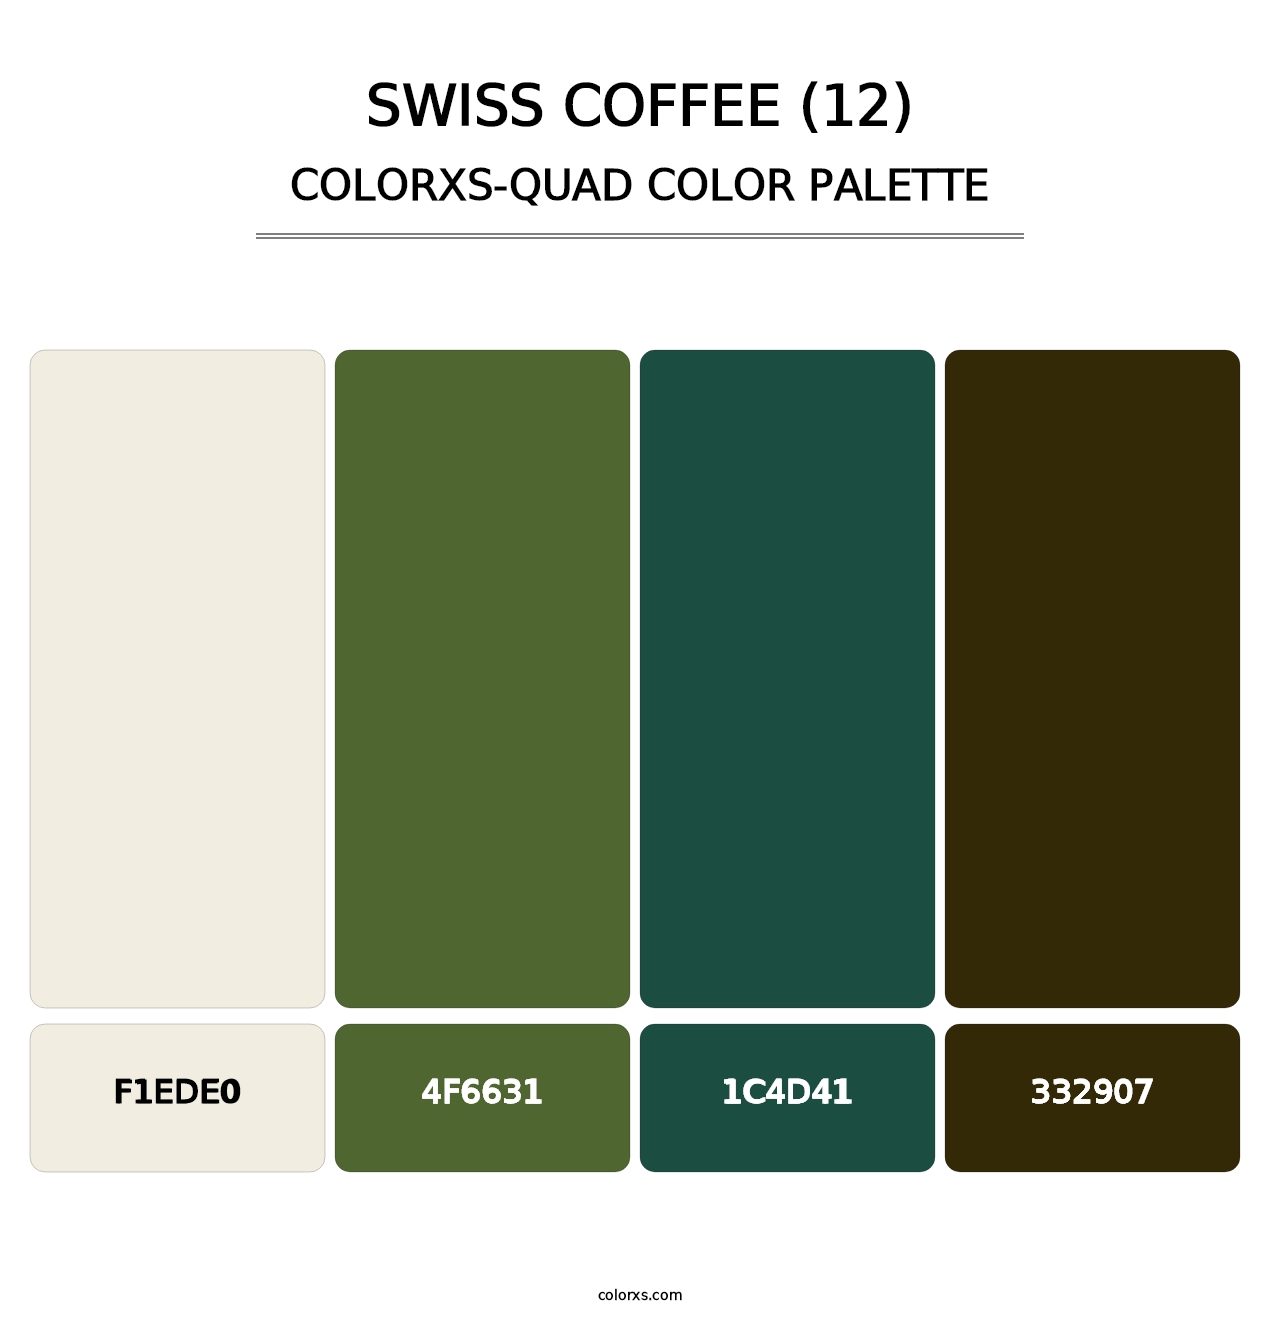 Swiss Coffee (12) - Colorxs Quad Palette